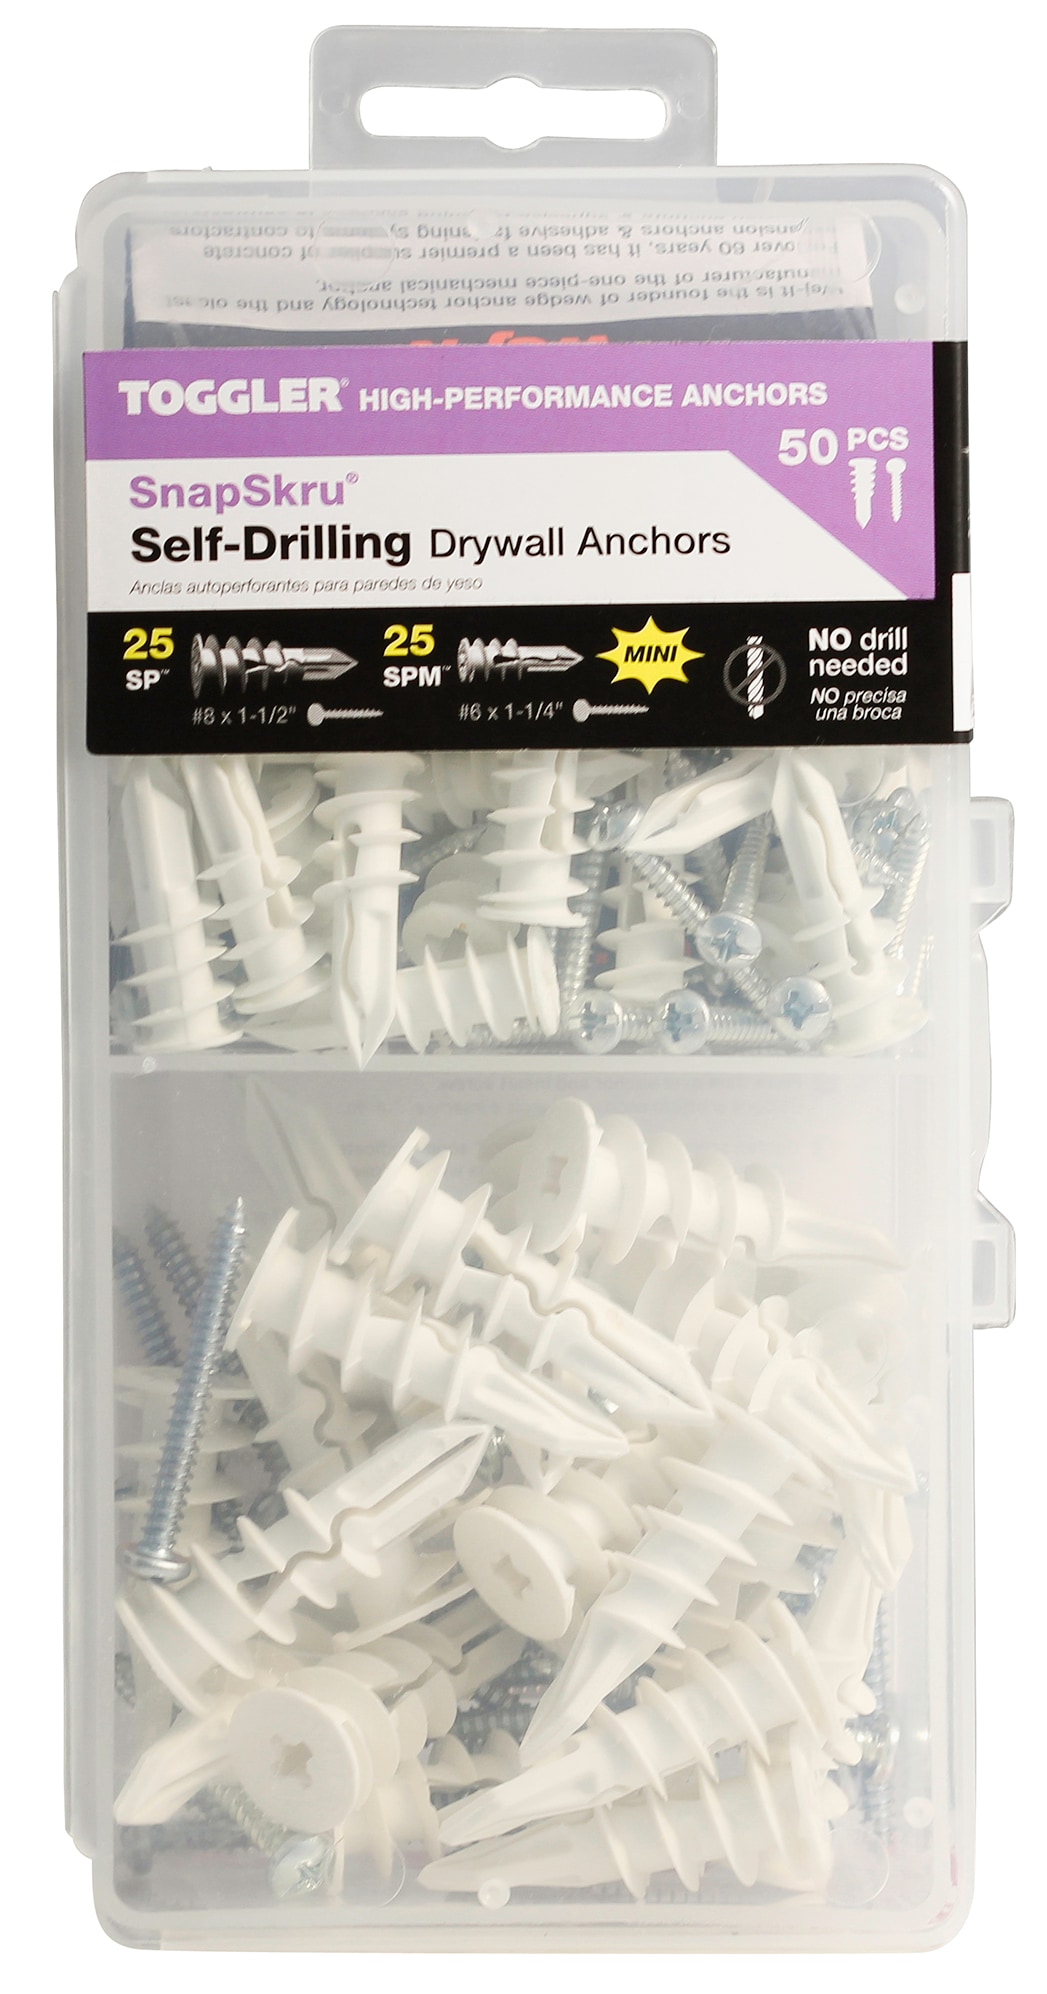 Drilling Drywall Anchor Kit Wall Anchors for Drywall with Screws Kit 50 Pack Self-Drilling Drywall Anchors with 50 Pack Screws 